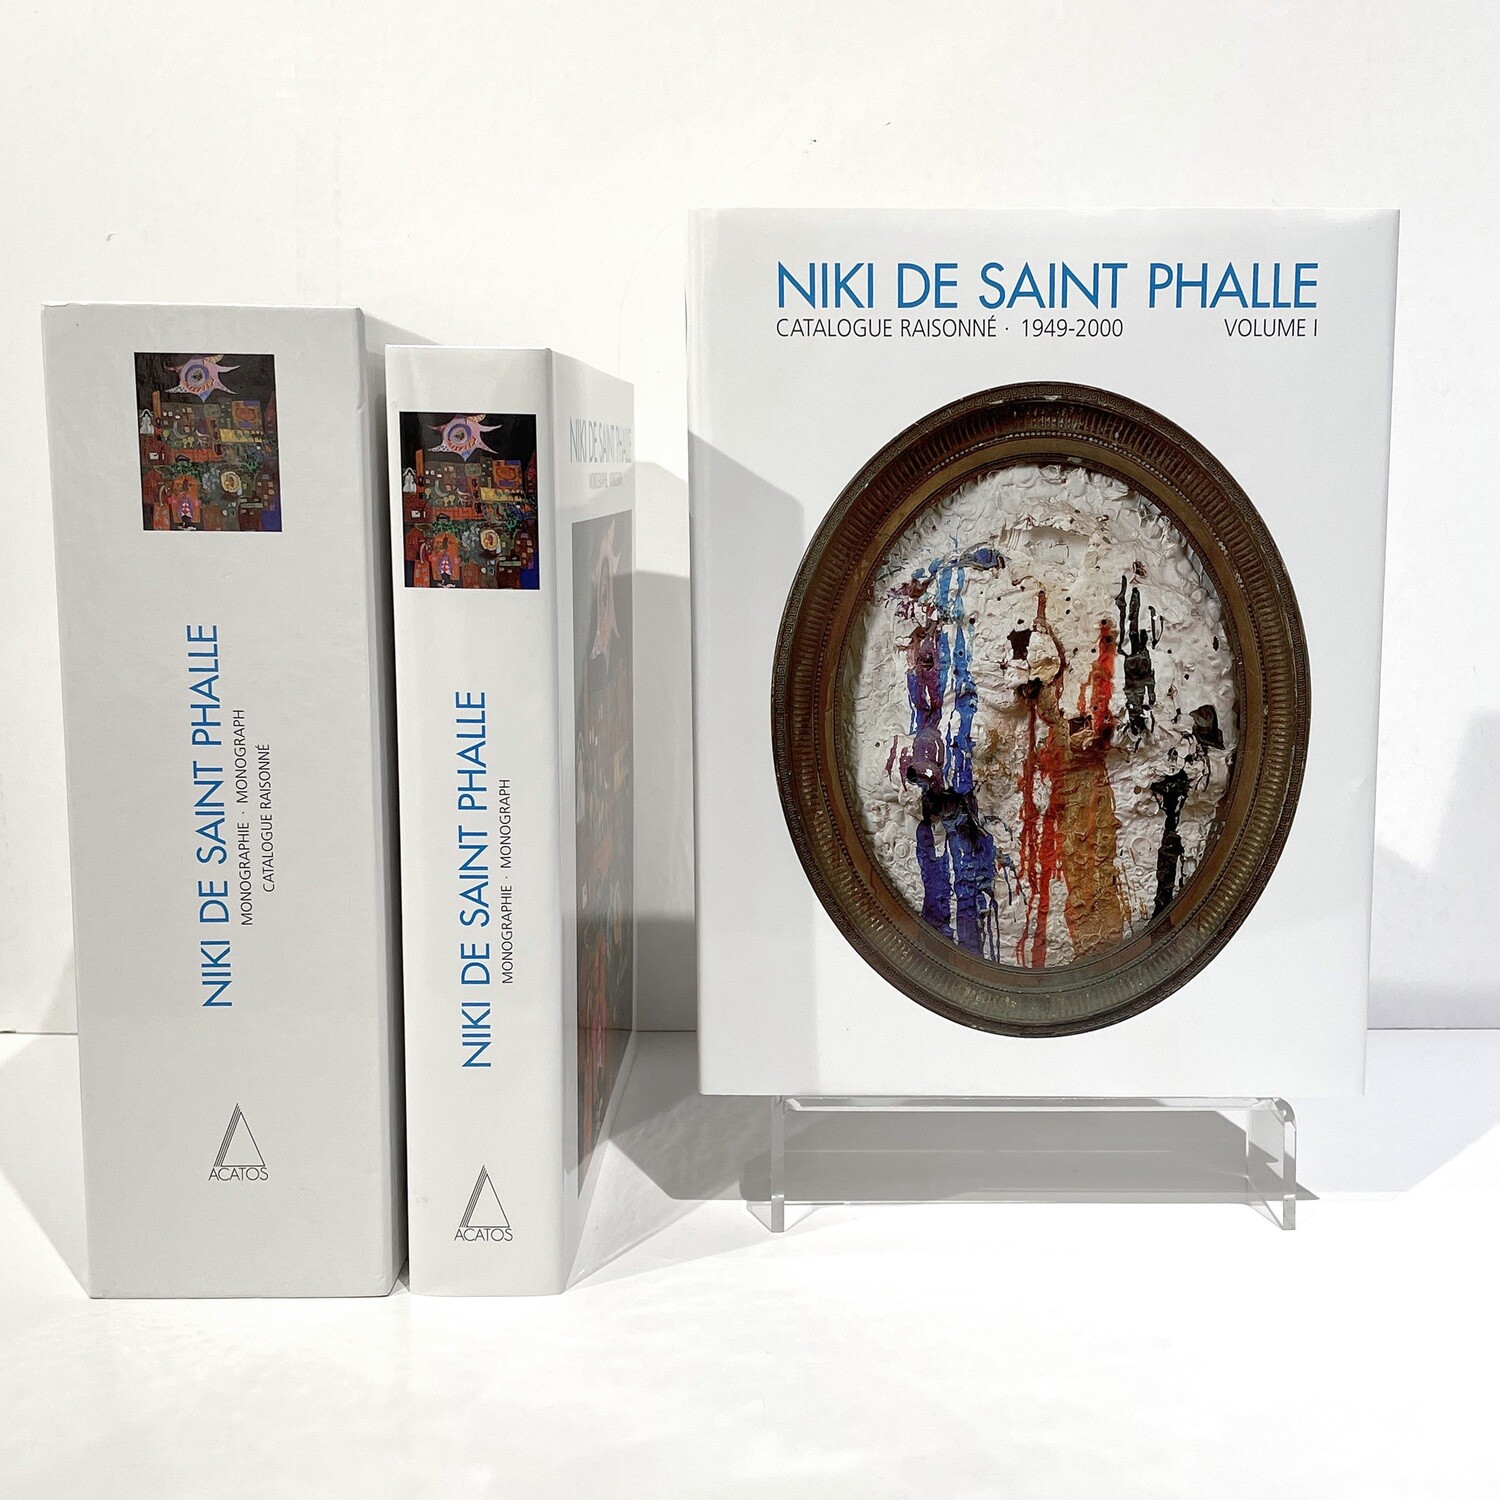 Boek | Niki de Saint Phalle - Monographie / Oeuvre Catalogus, 2001